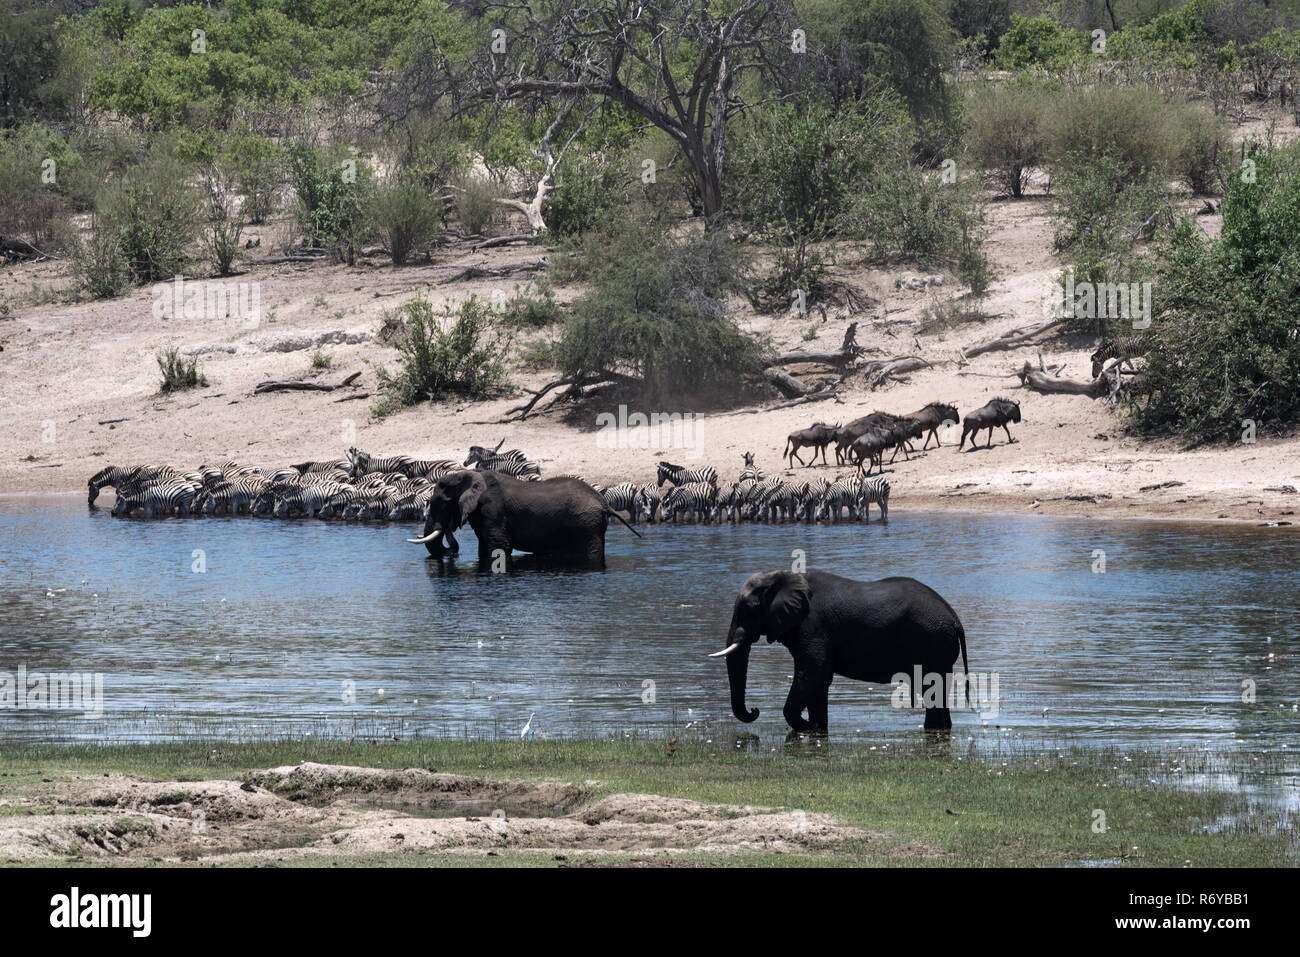 Elephants, zebras and wildebeest on Boteti River in Makgadikgadi Pans National Park, Botswana Stock Photo